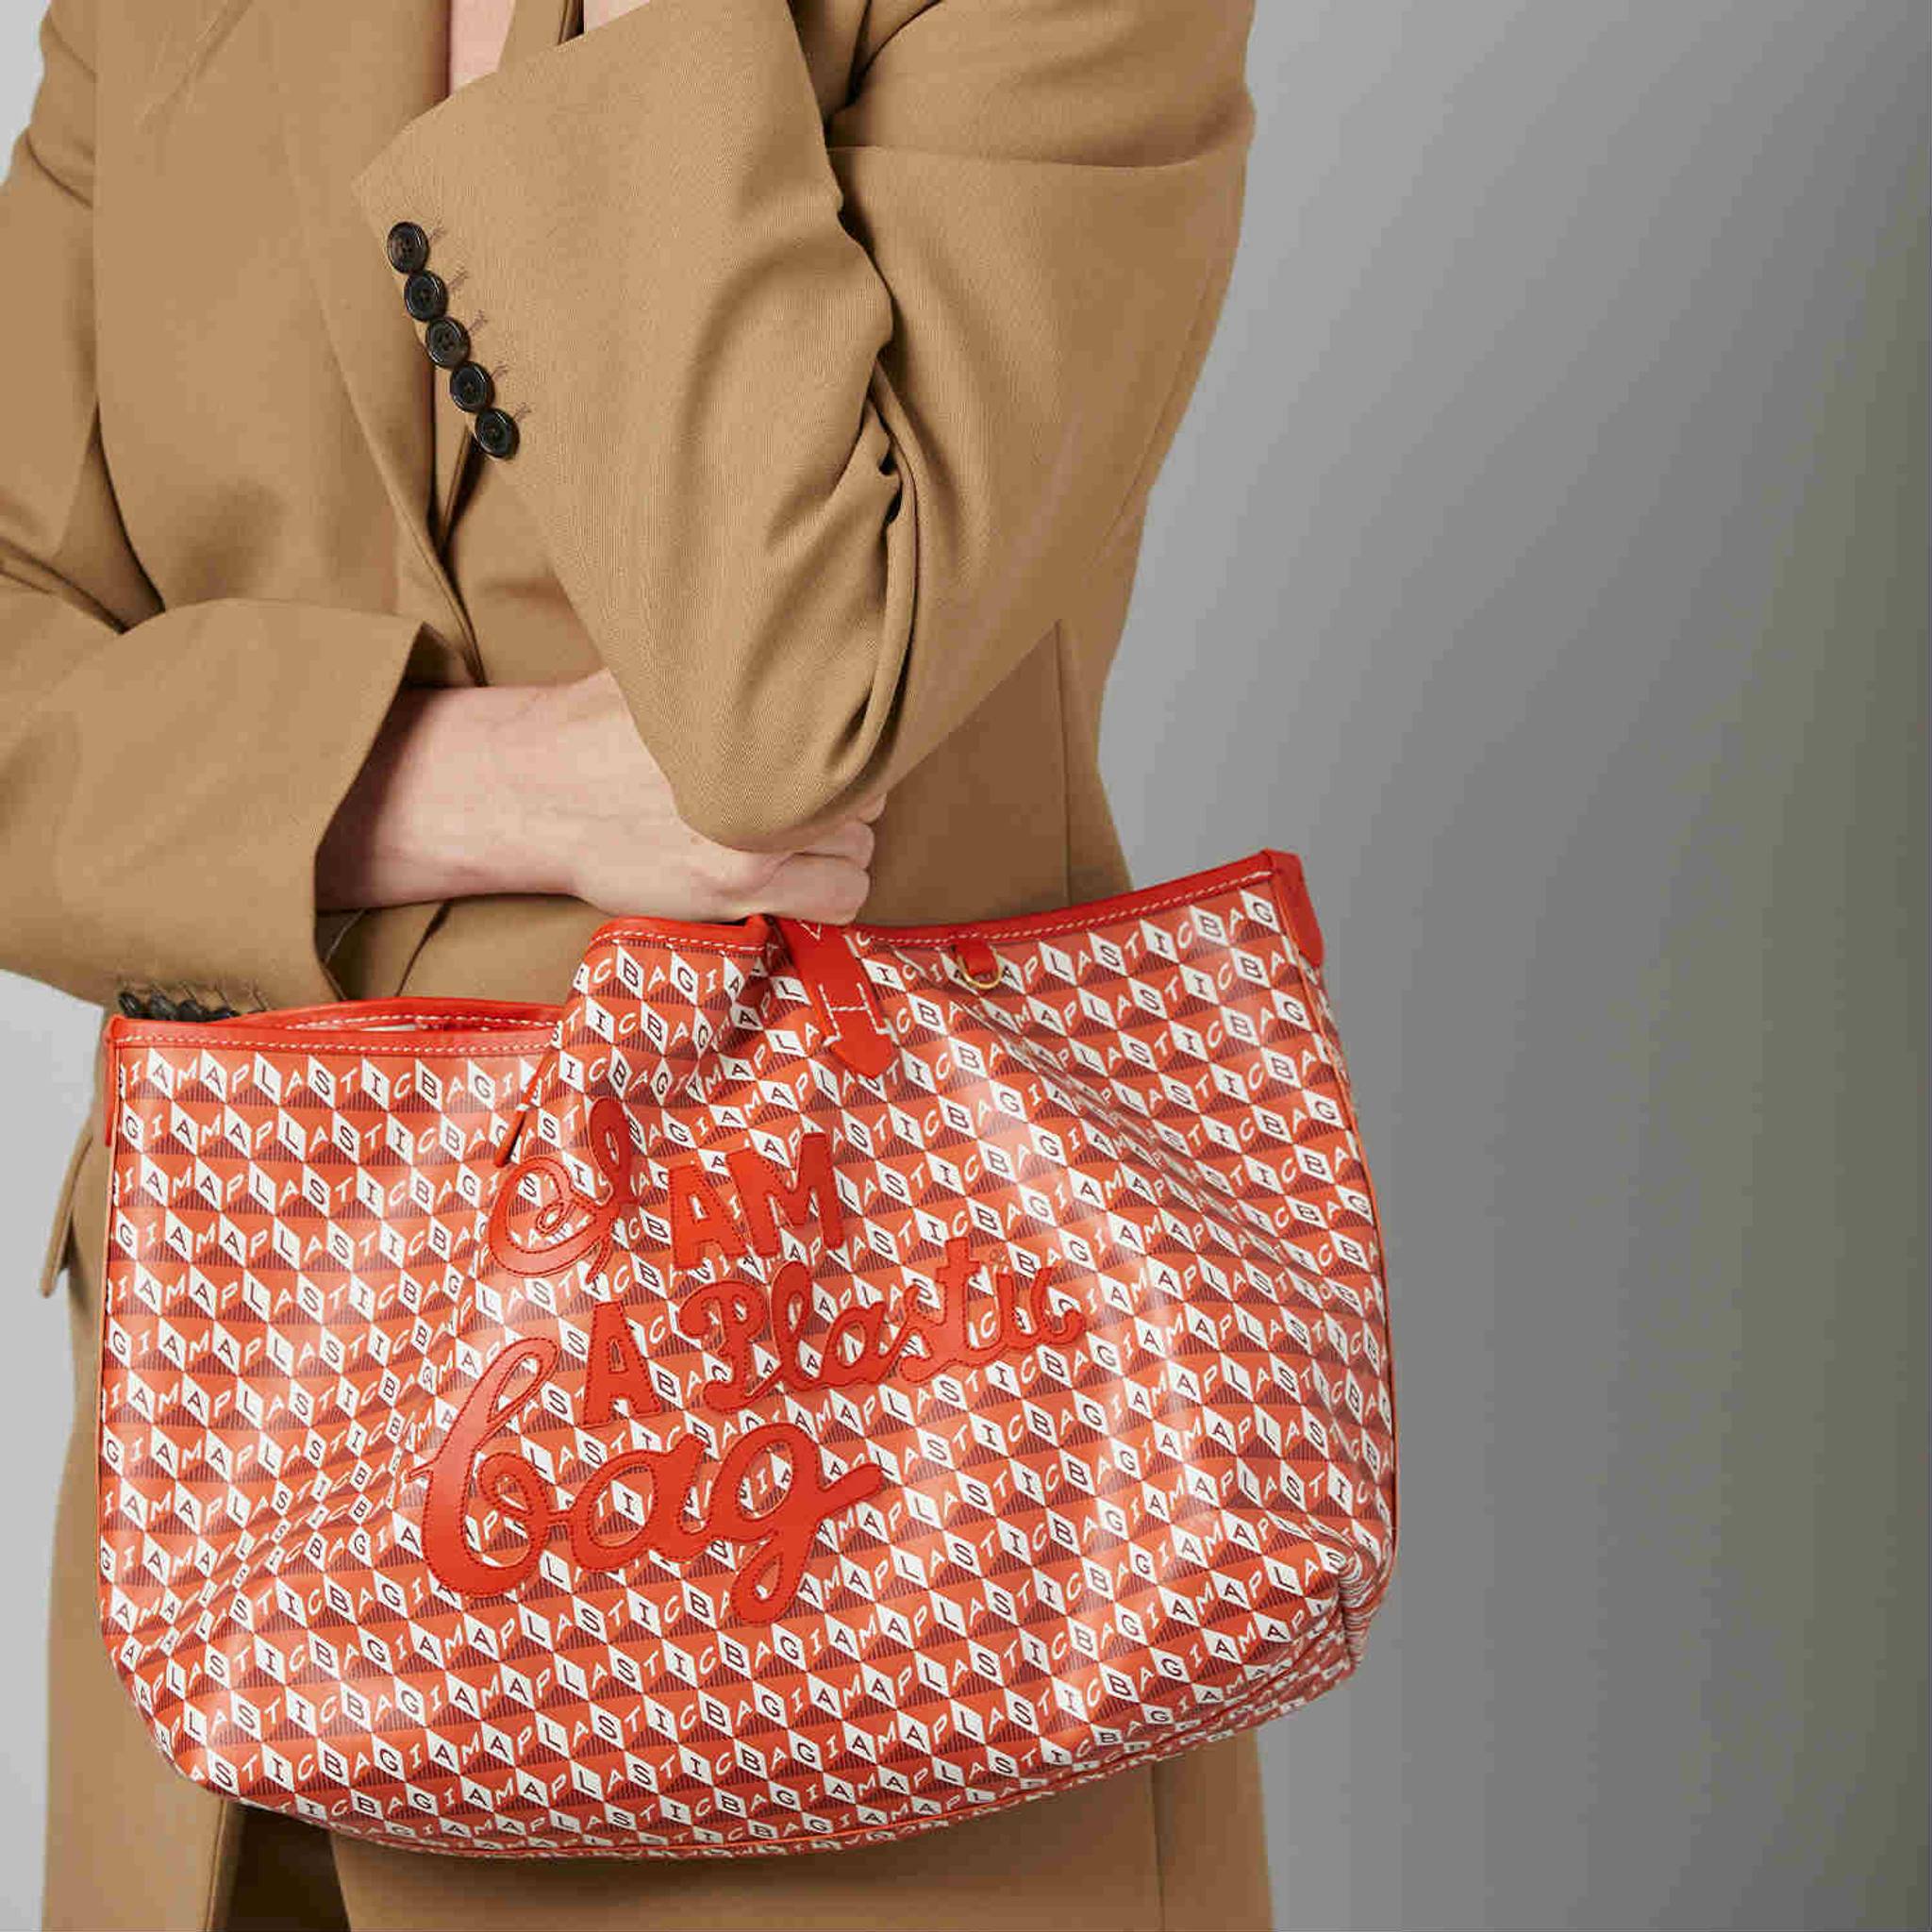 Designer ‘plastic bag’ lets shoppers flaunt eco values